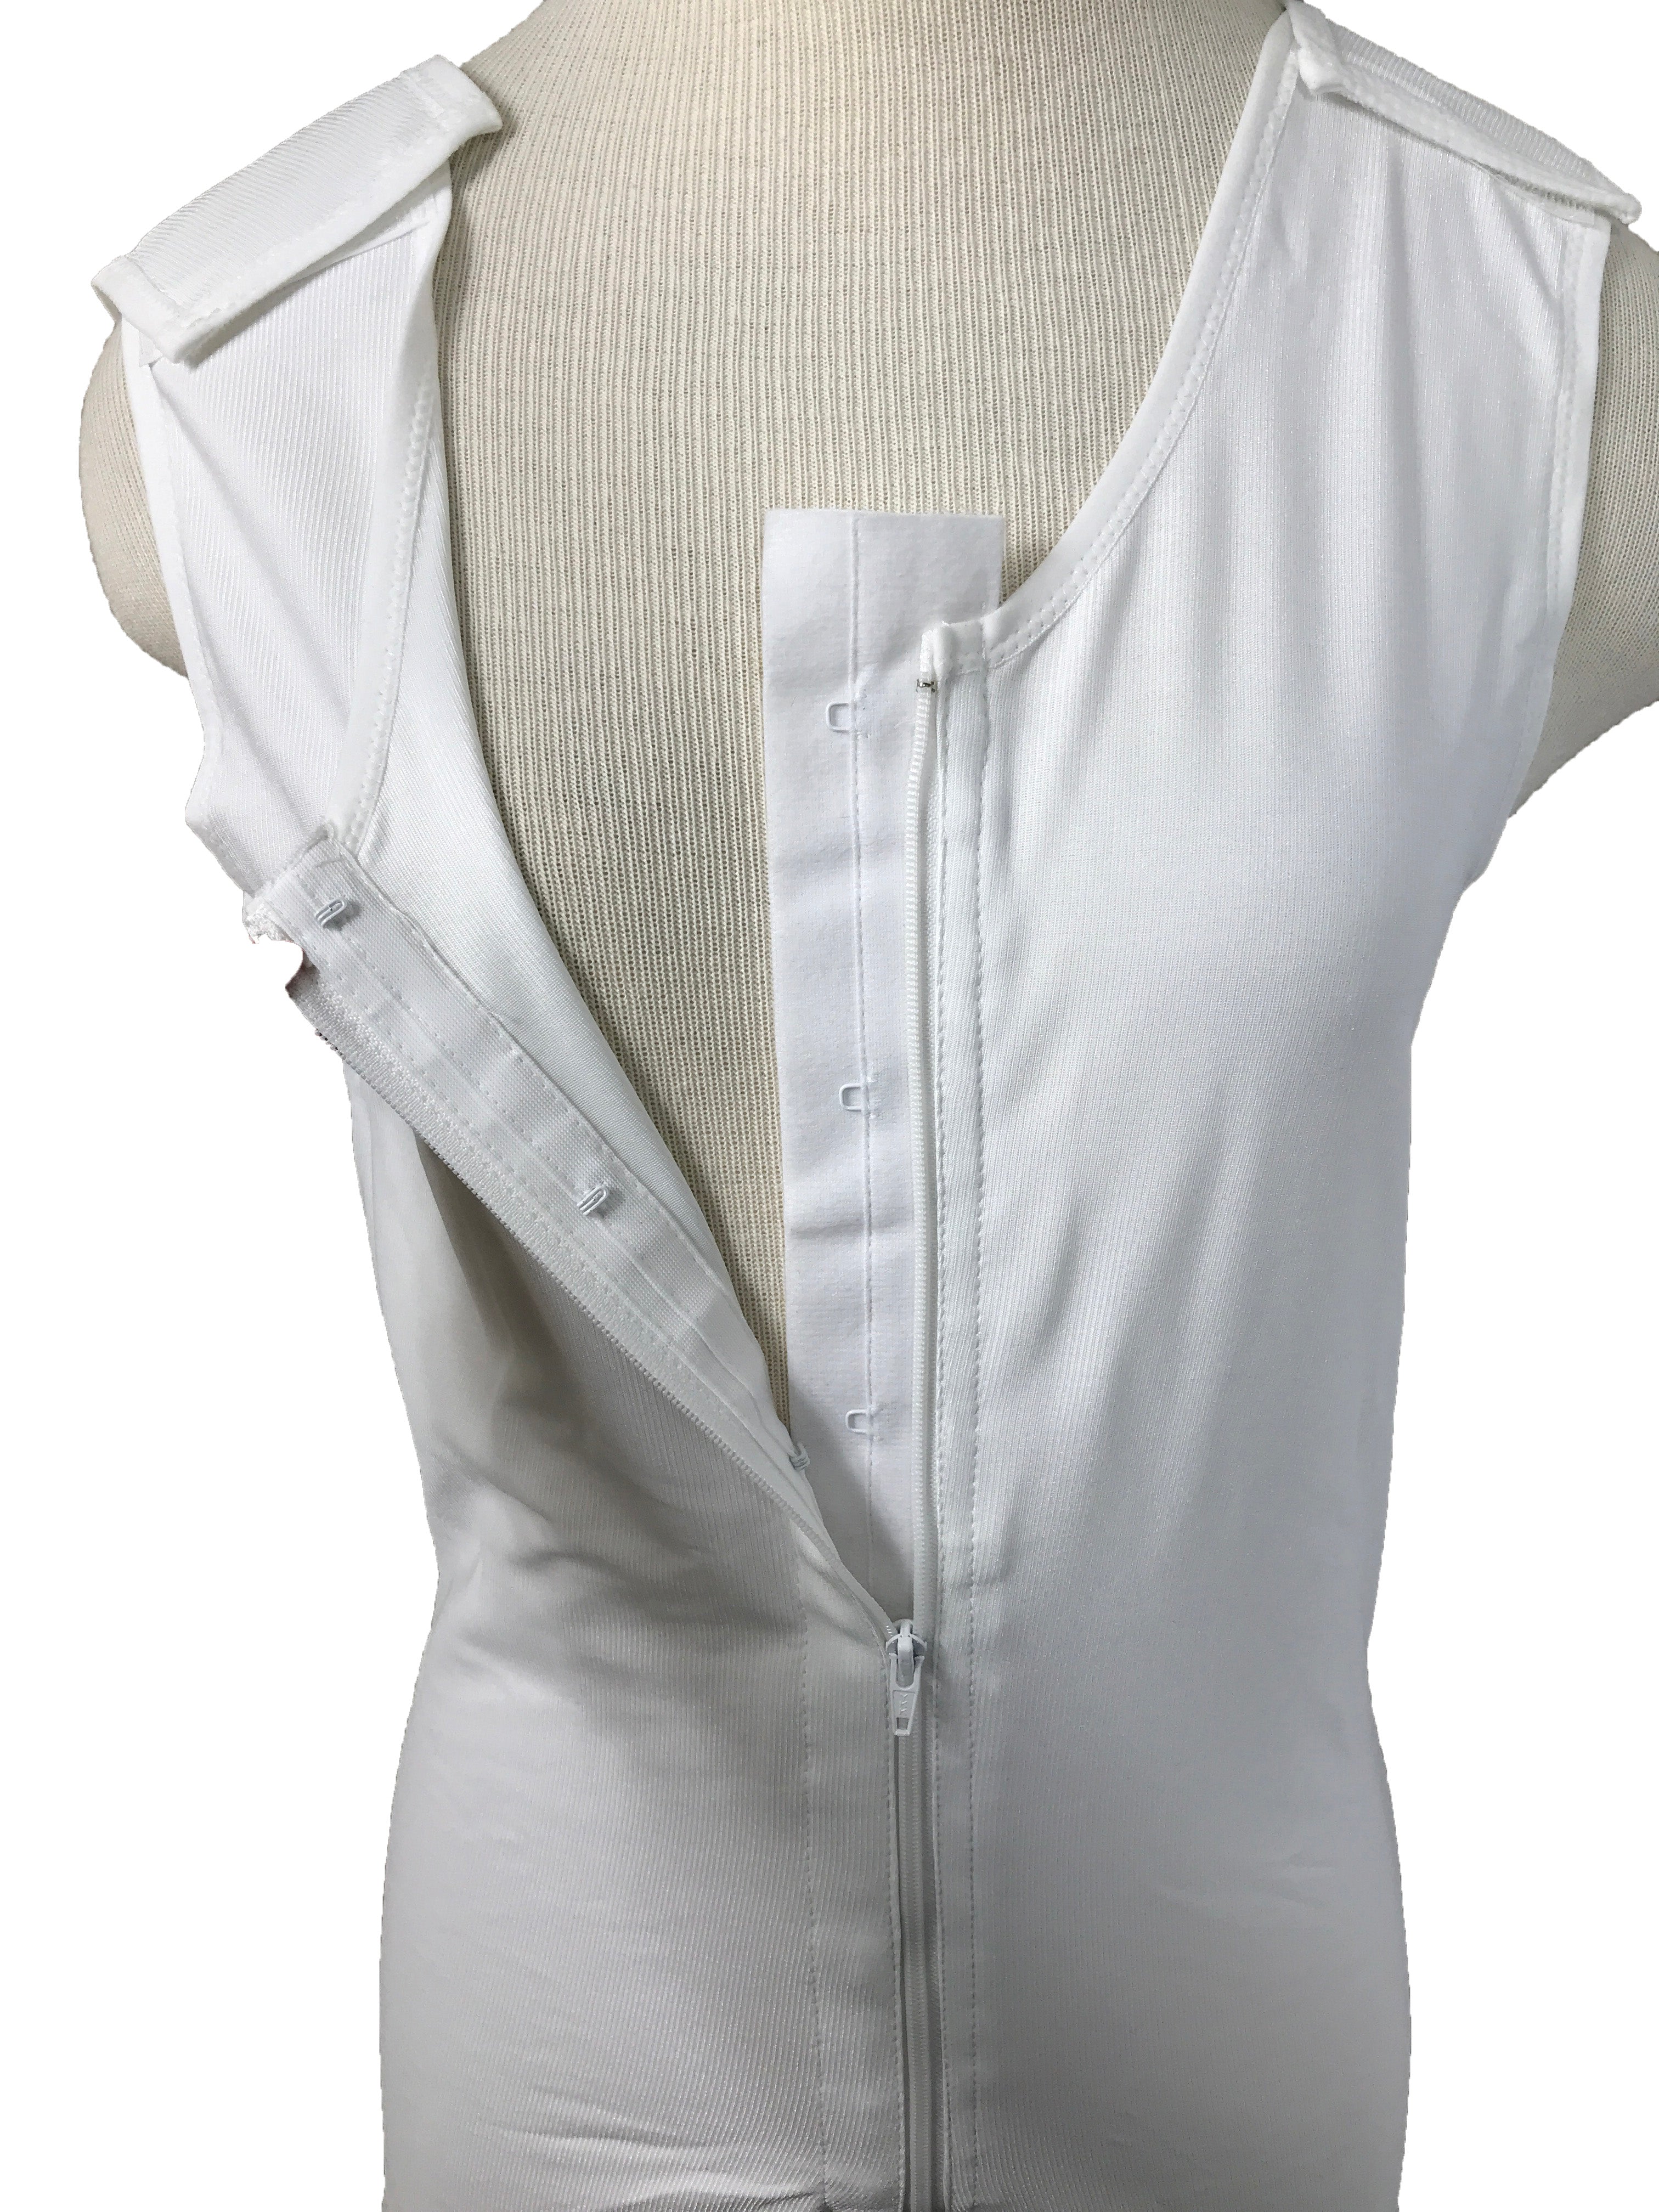 Marena ComfortWear Compression and Support Garment White Bodysuit Men's Size L